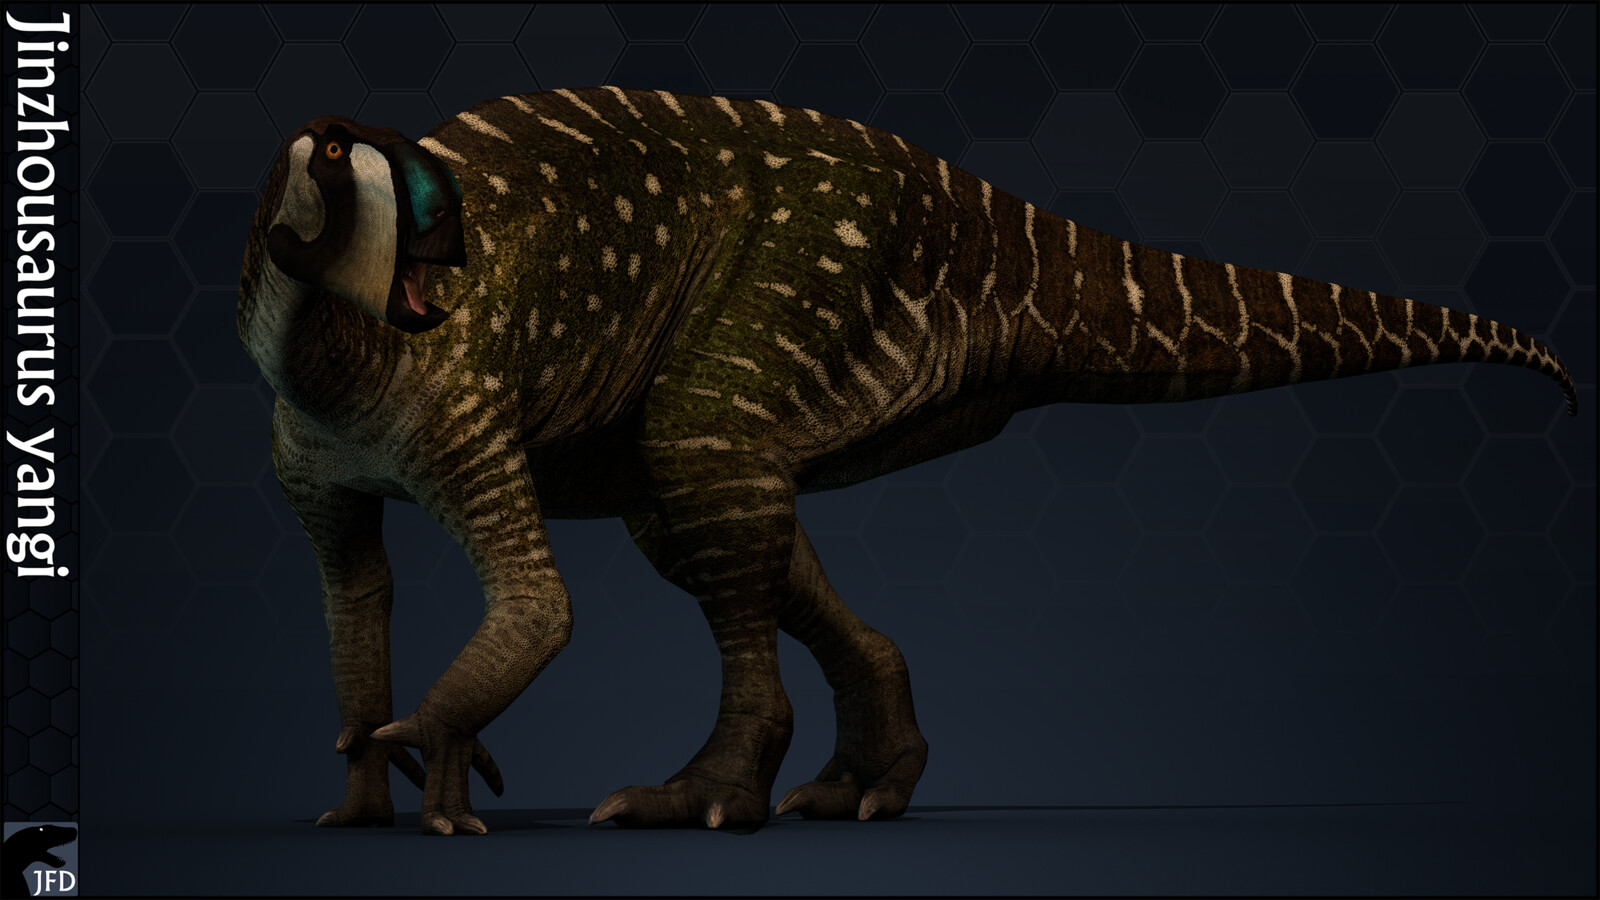 Jinzhousaurus yangi full body render.